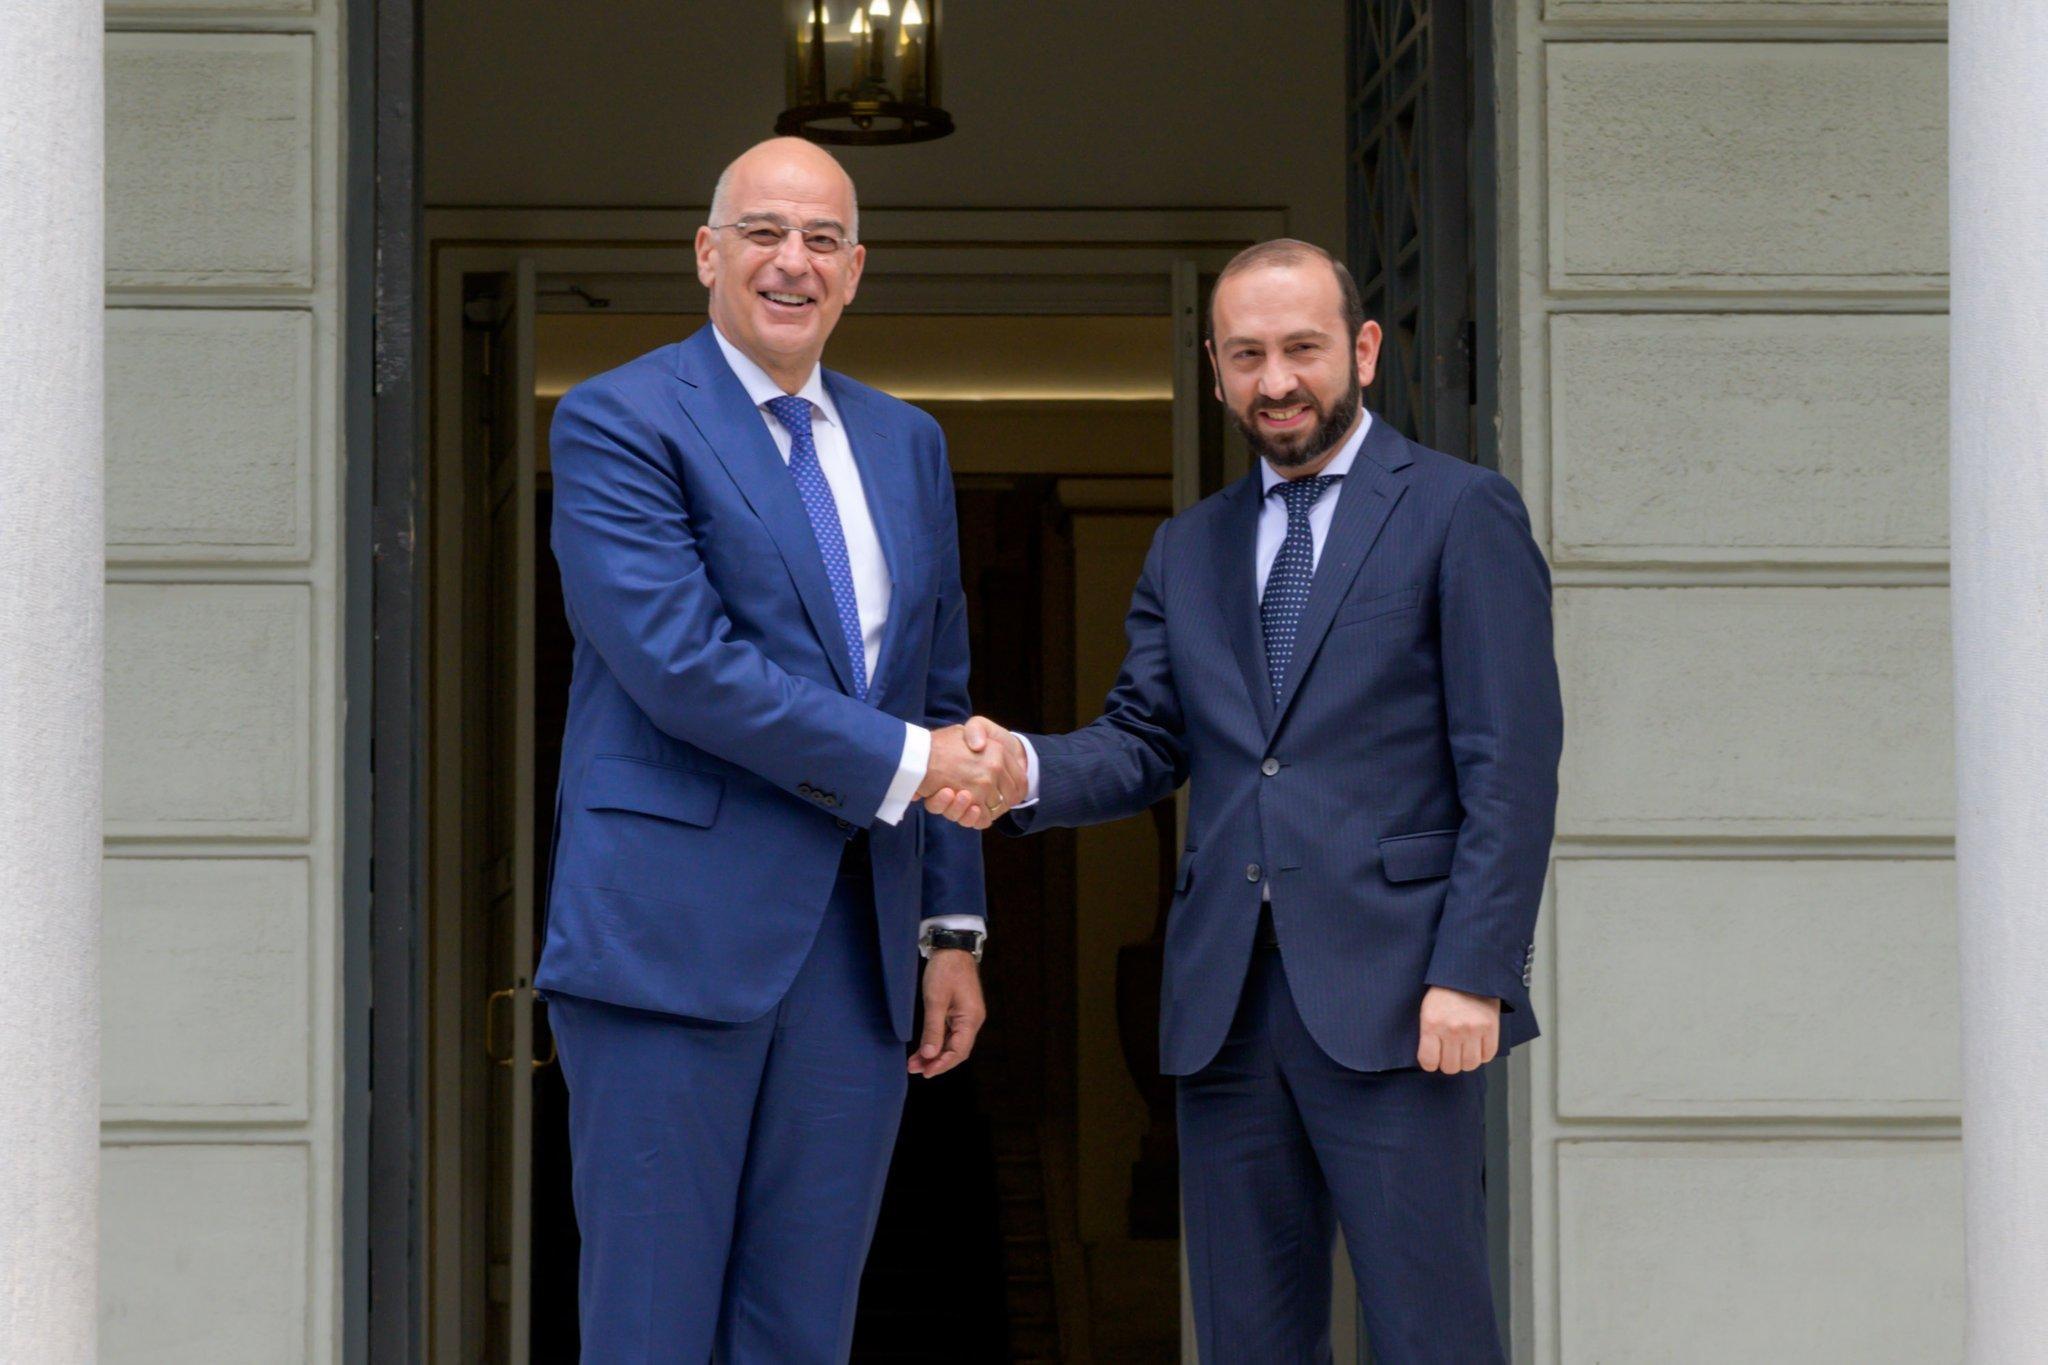 Armenian Foreign Minister Ararat Mirzoyan and Greek Foreign Minister Nikos Dendias on June 27, 2022.